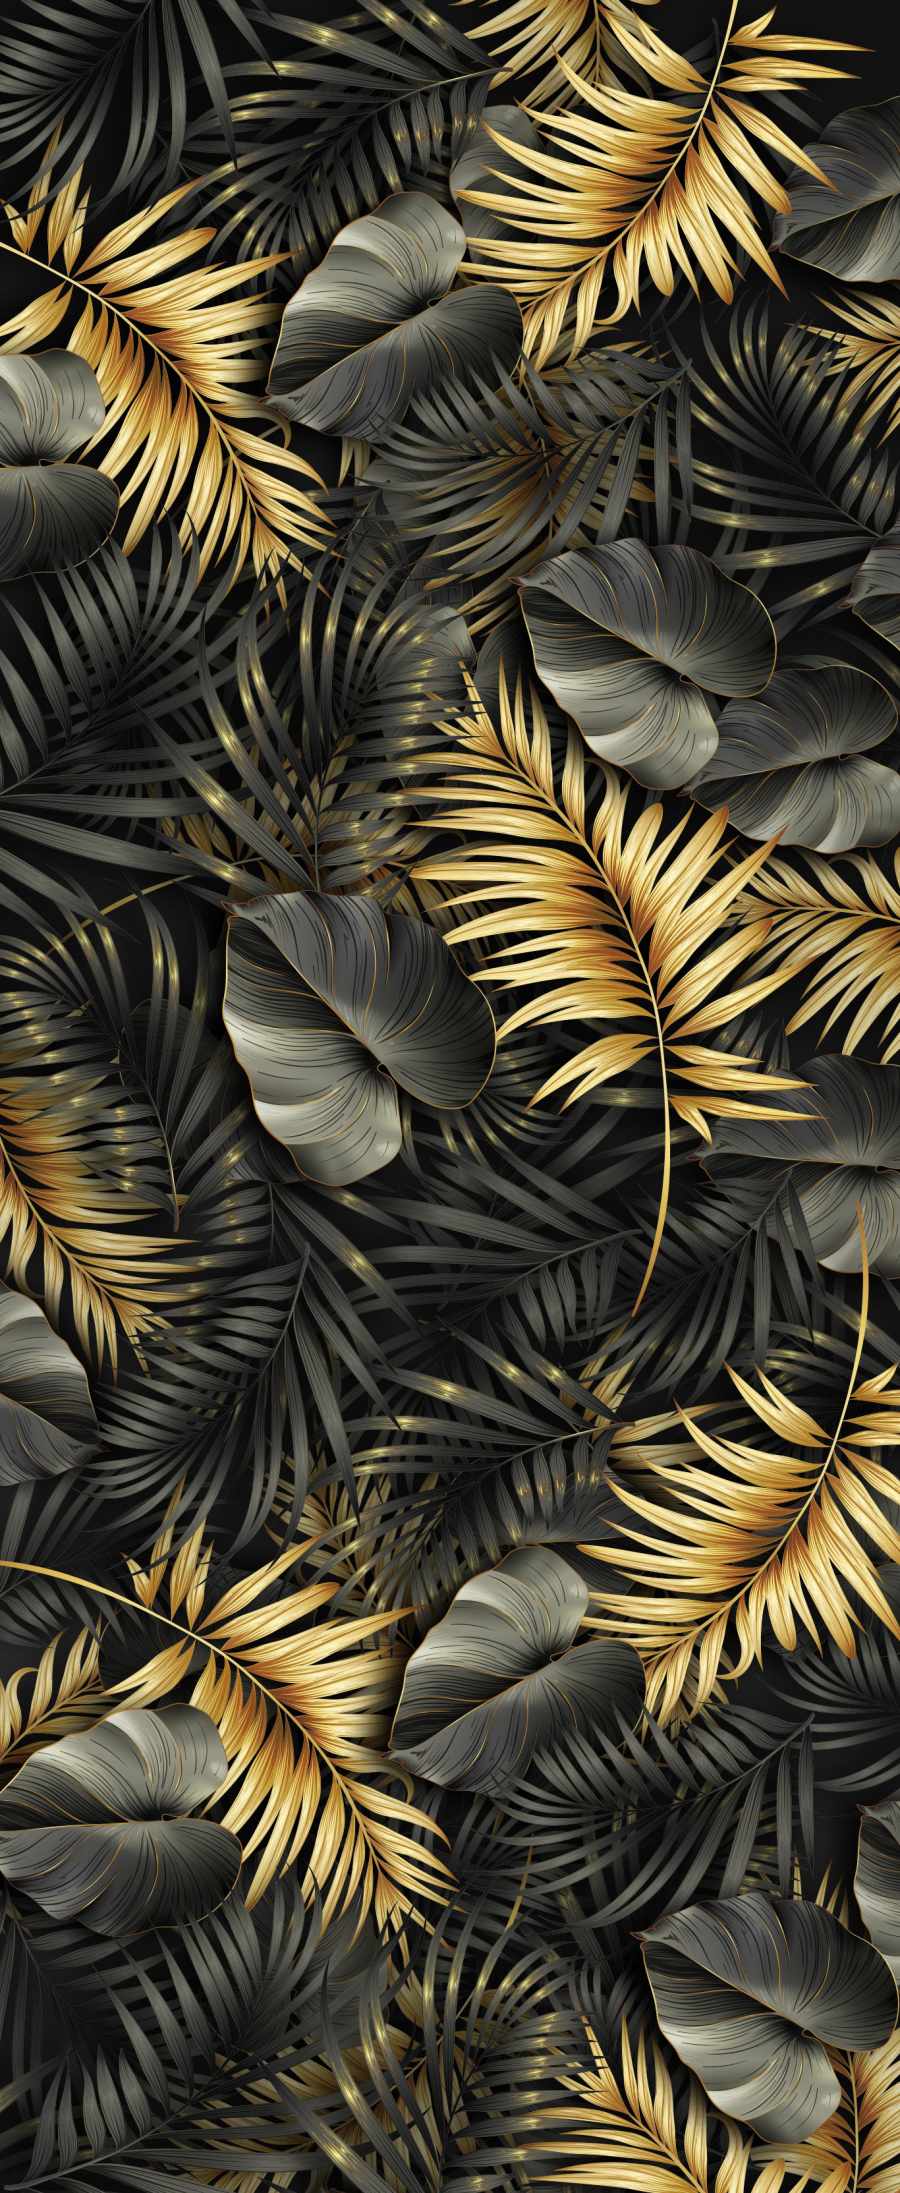 Golden Plants Foliage IPhone Wallpaper Wallpaper, iPhone Wallpaper